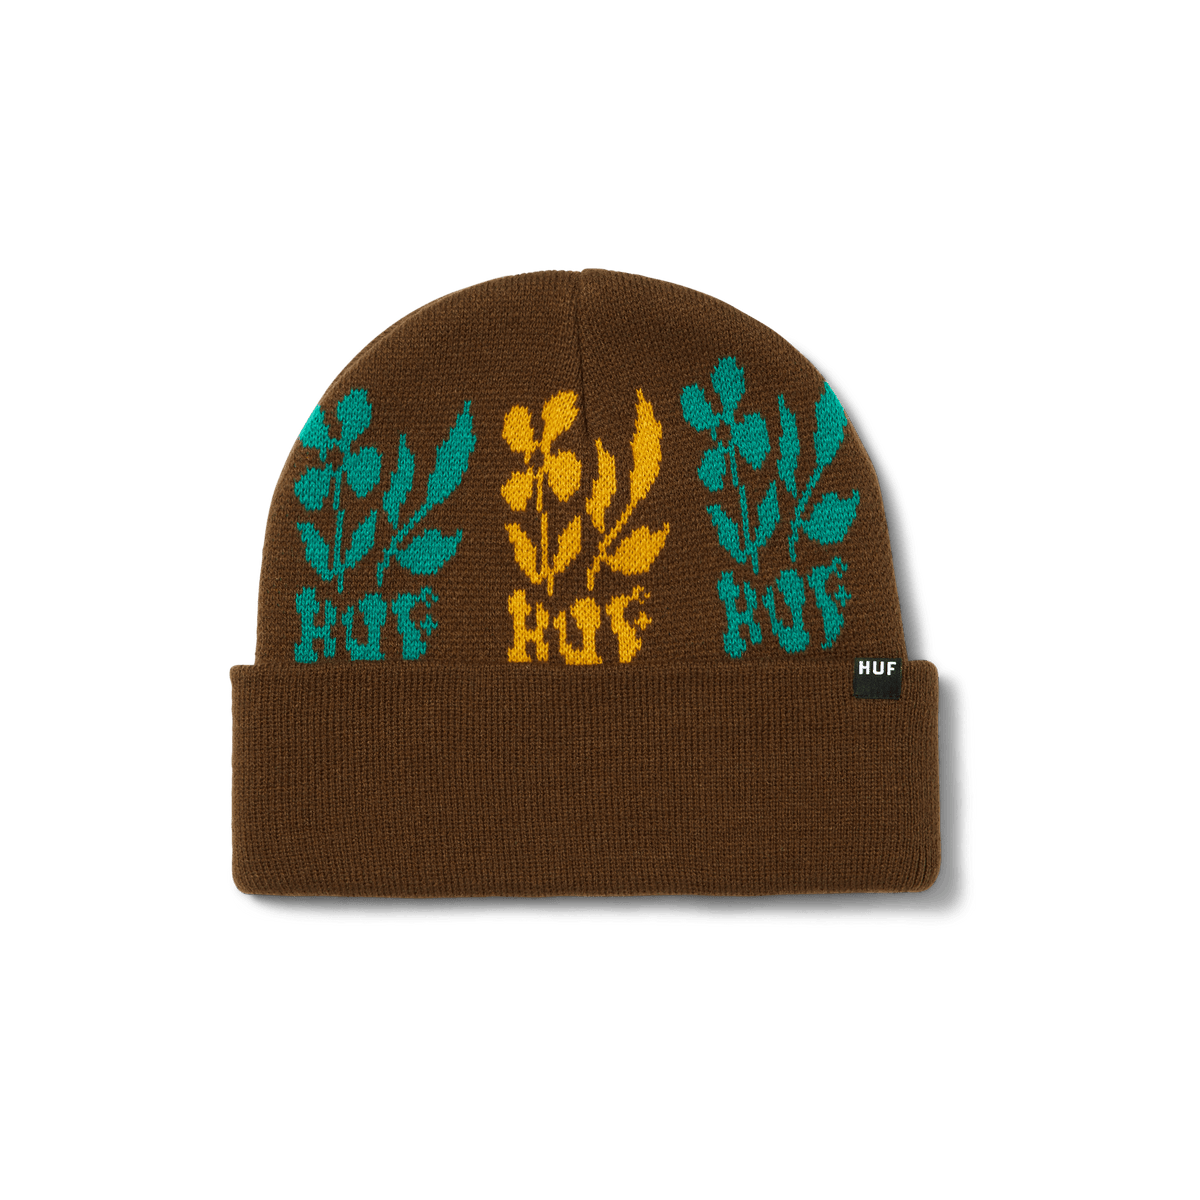 【HOT国産】NOAH FLORAL JAQUARD BEANIE Black ビーニー 帽子